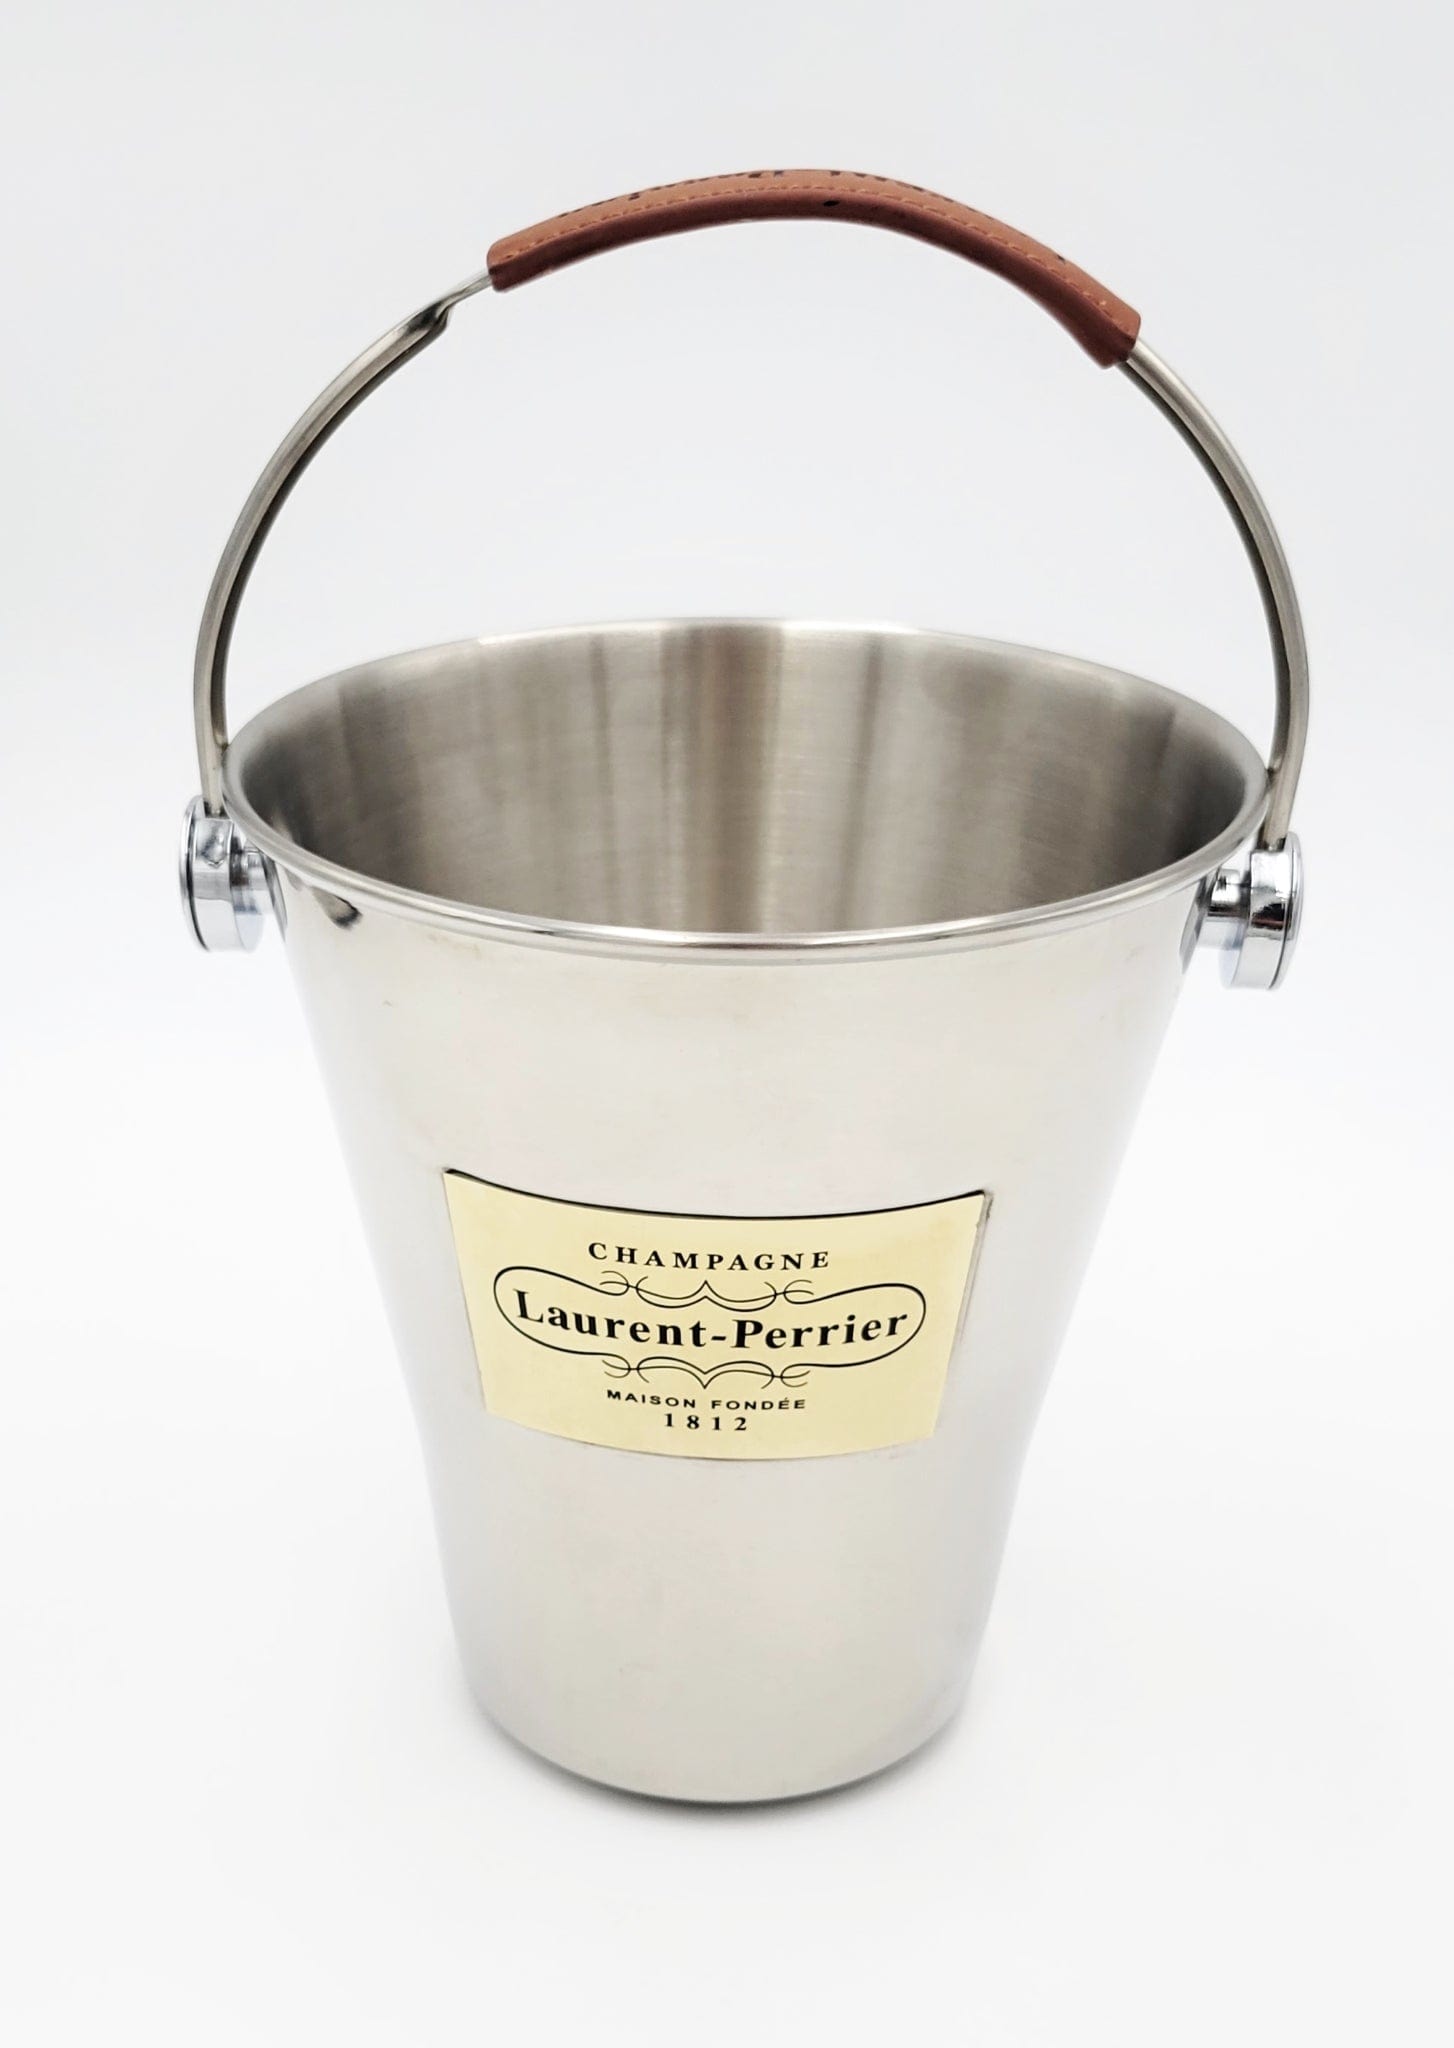 Laurent Perrier Barware French Laurent-Perrier Maison Fondee 1812 Champagne Chiller Ice Bucket NOS